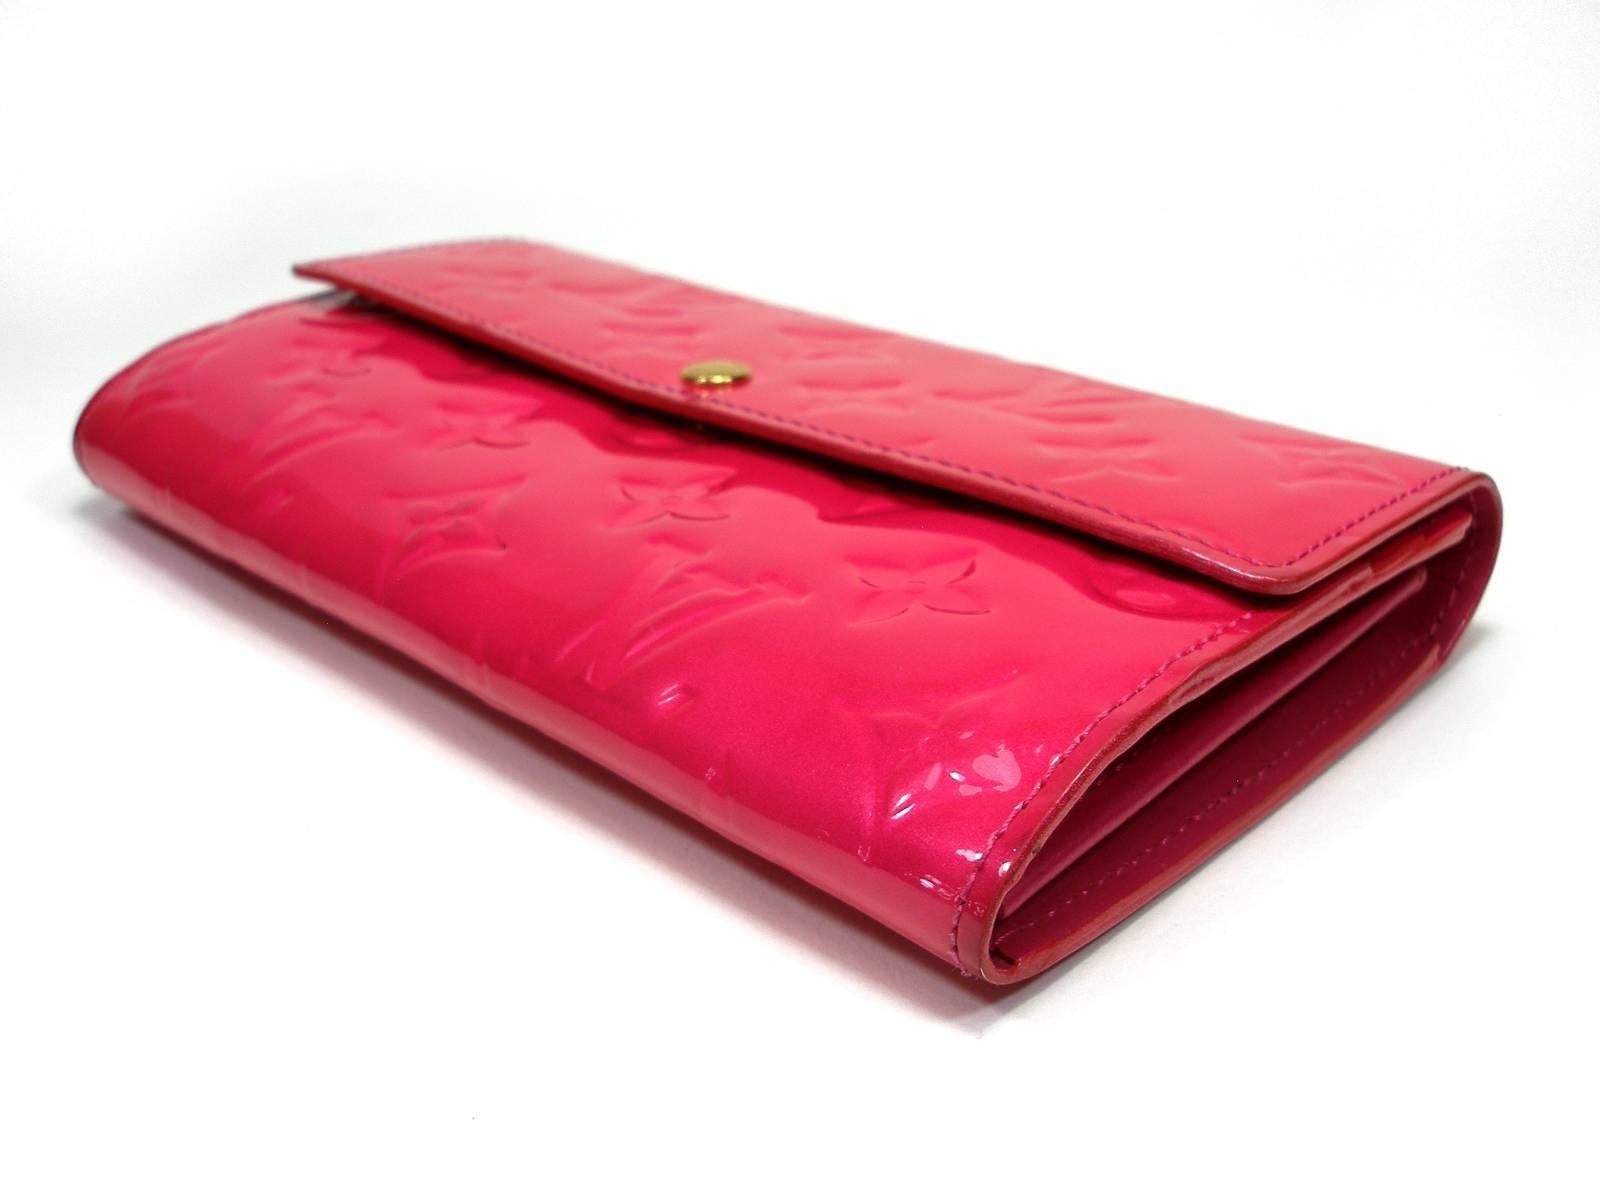  Louis Vuitton Vernis Sarah Wallet Monogram Vernis Rose Pink / Good Condition  1